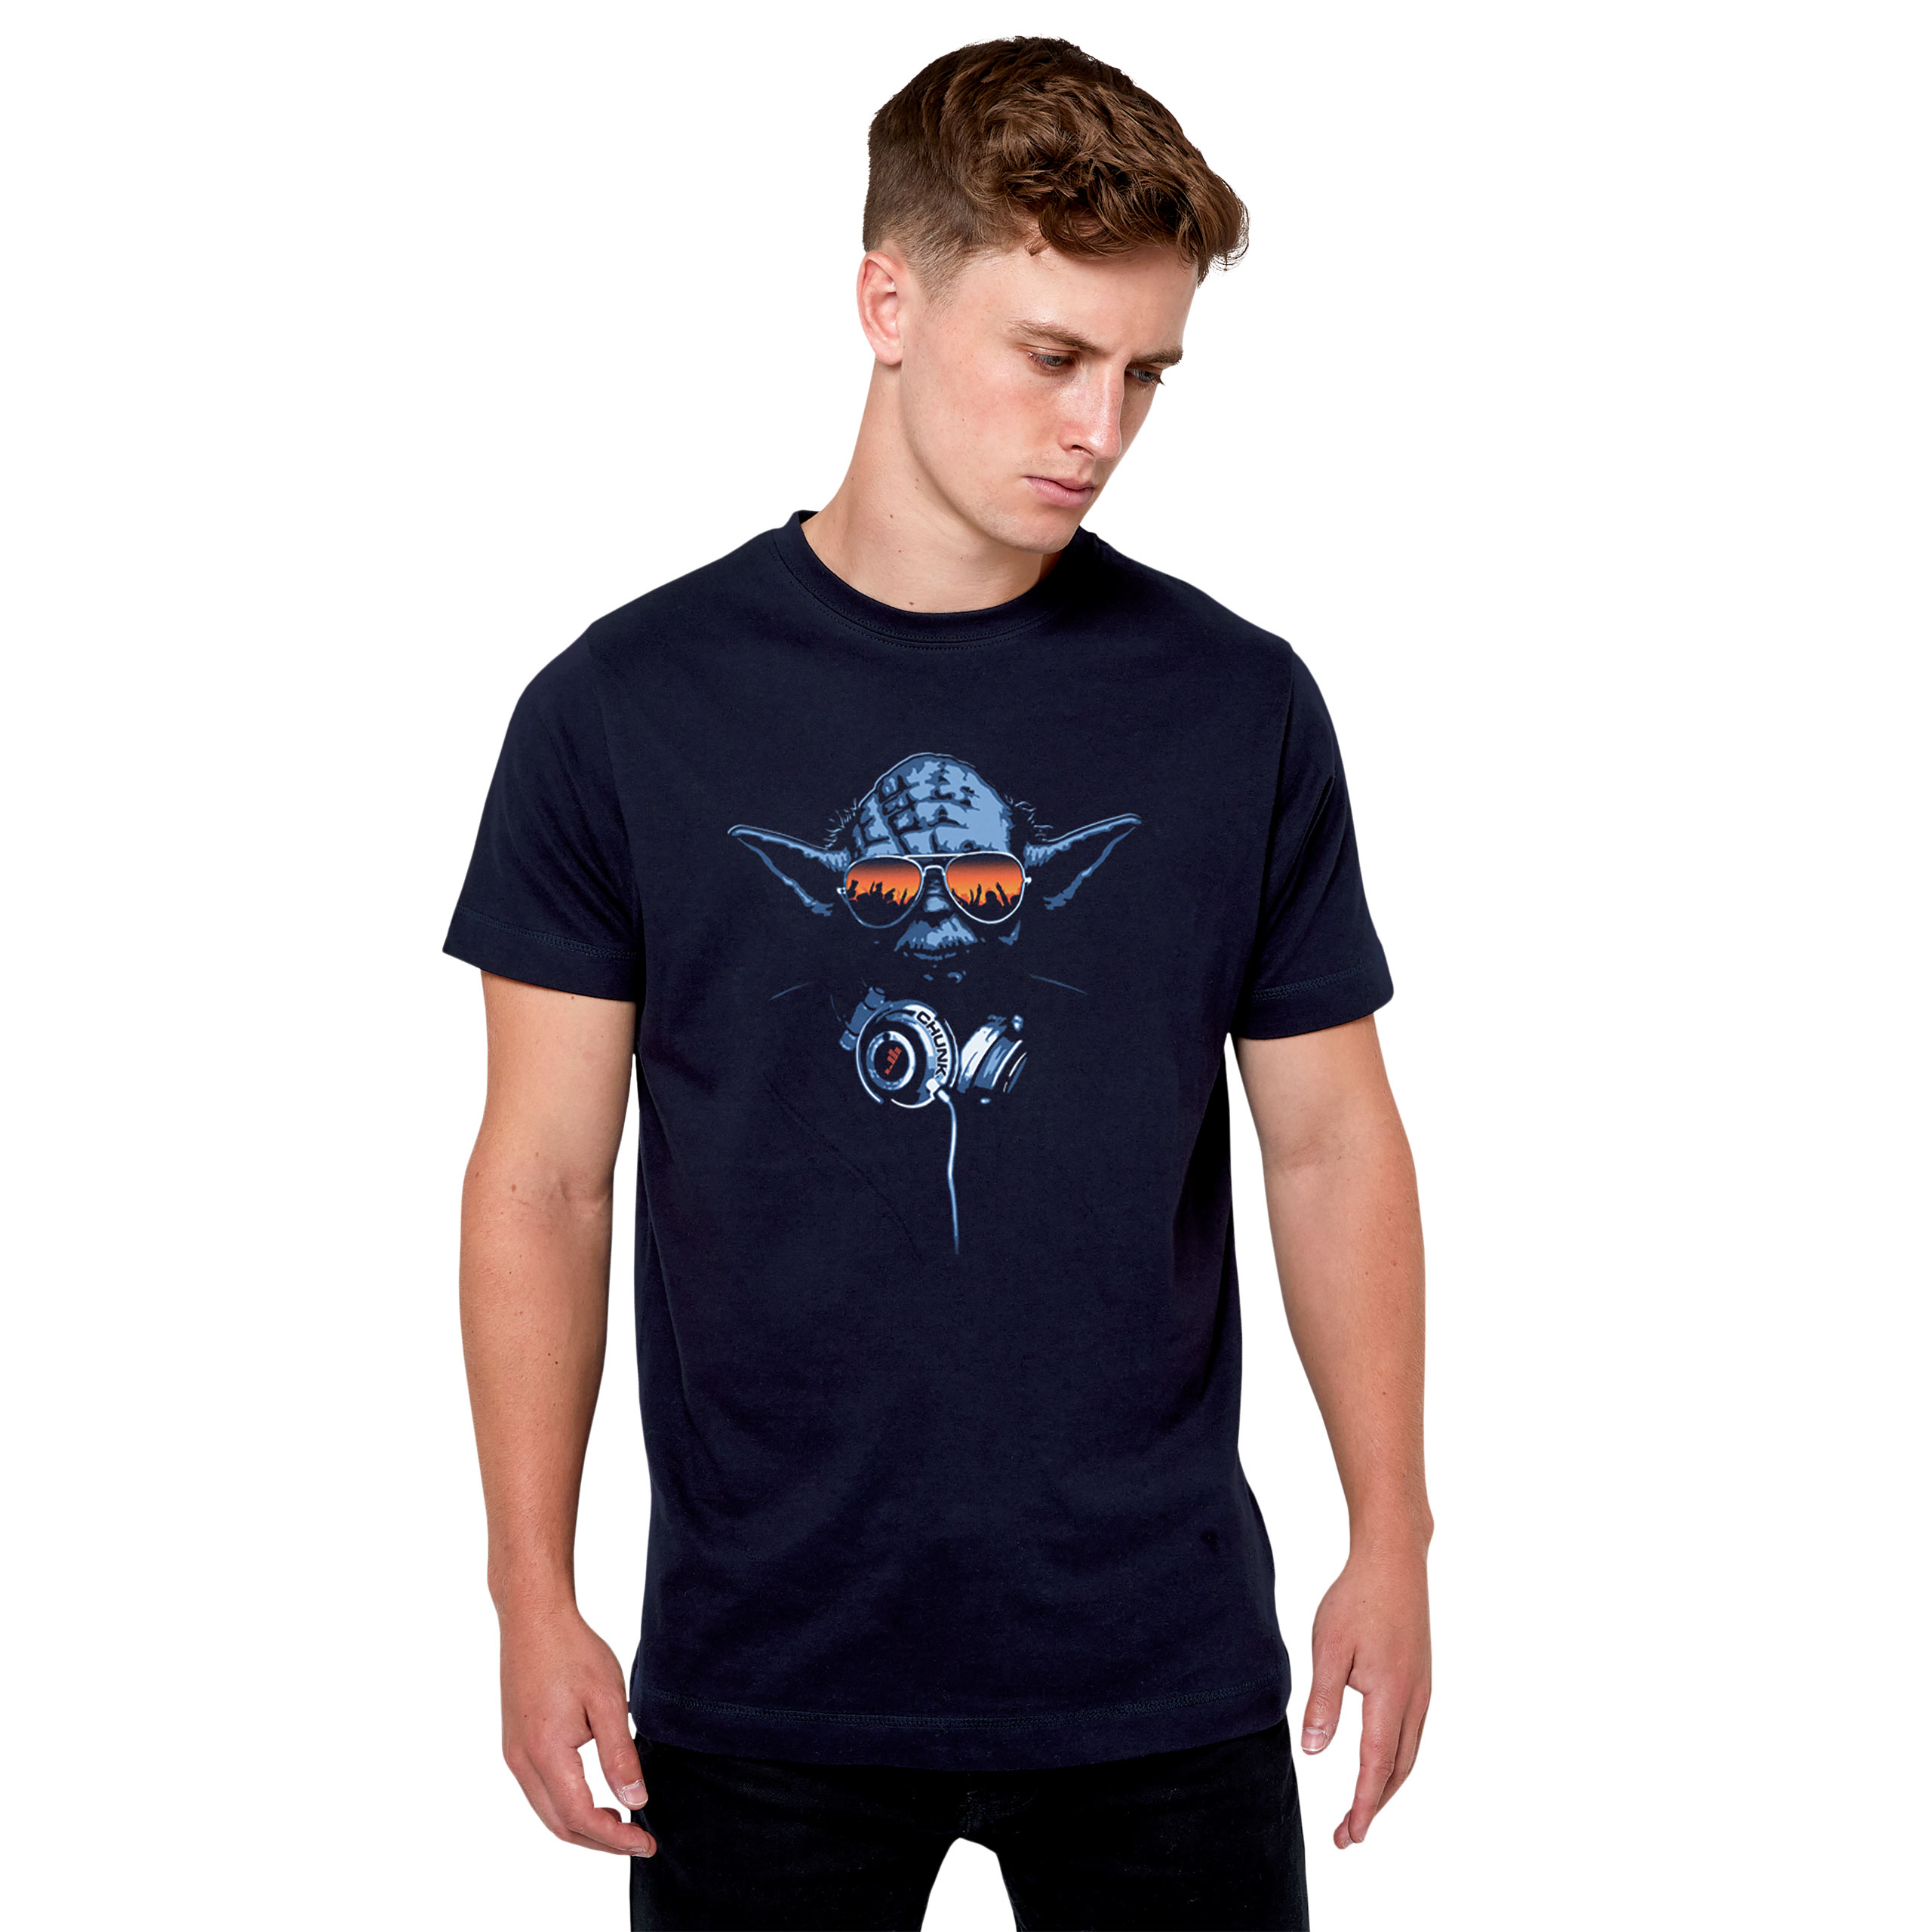 DJ Knight T-Shirt für Star Wars Fans blau